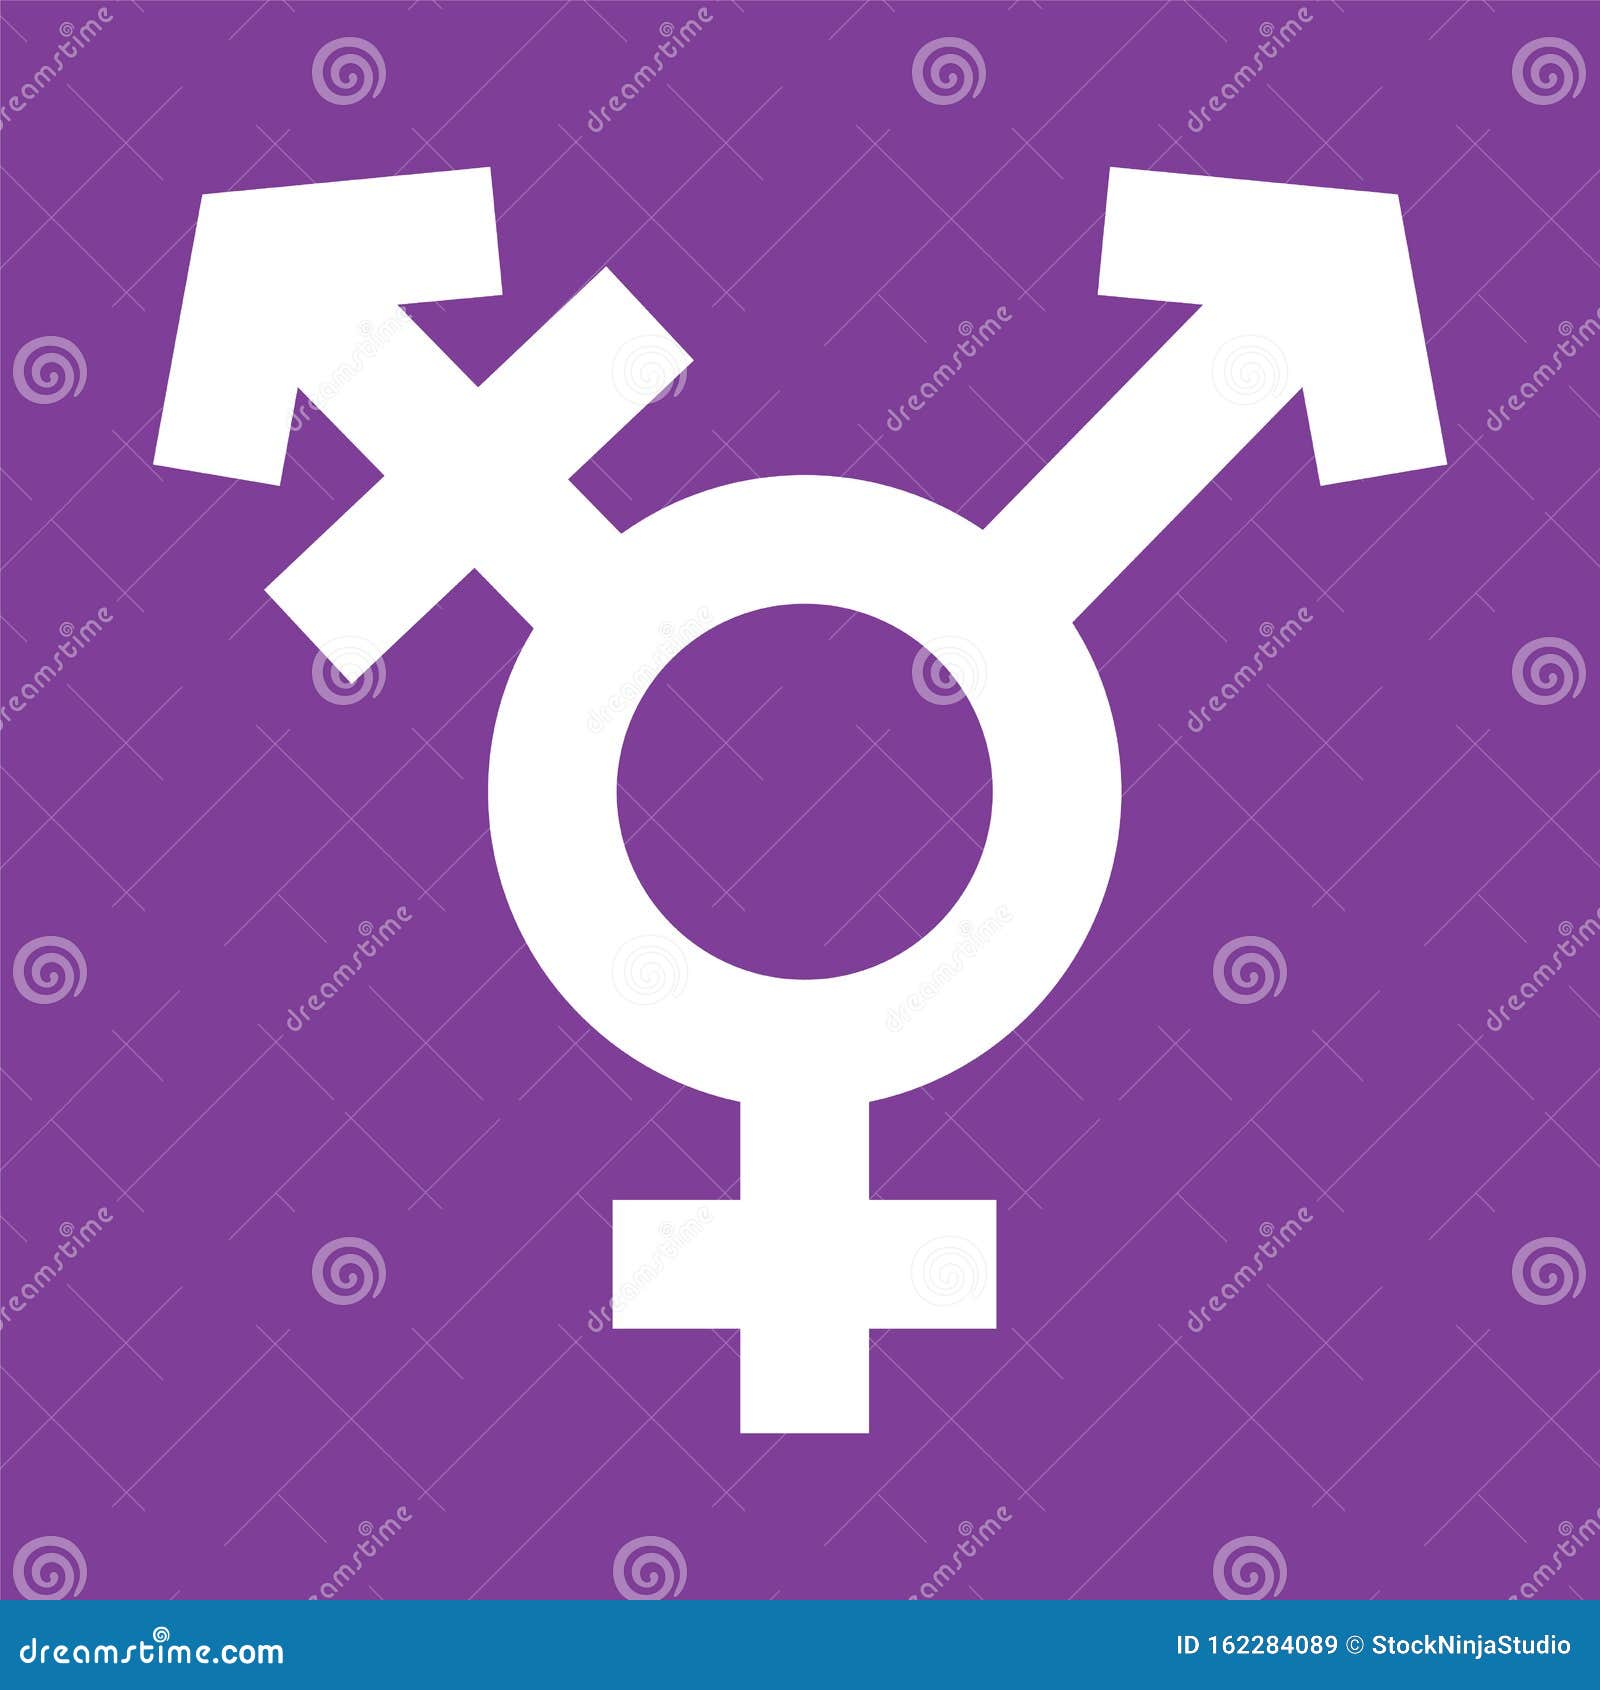 transgender  in violet color background. shemale sexual orientation icon.  gender sign